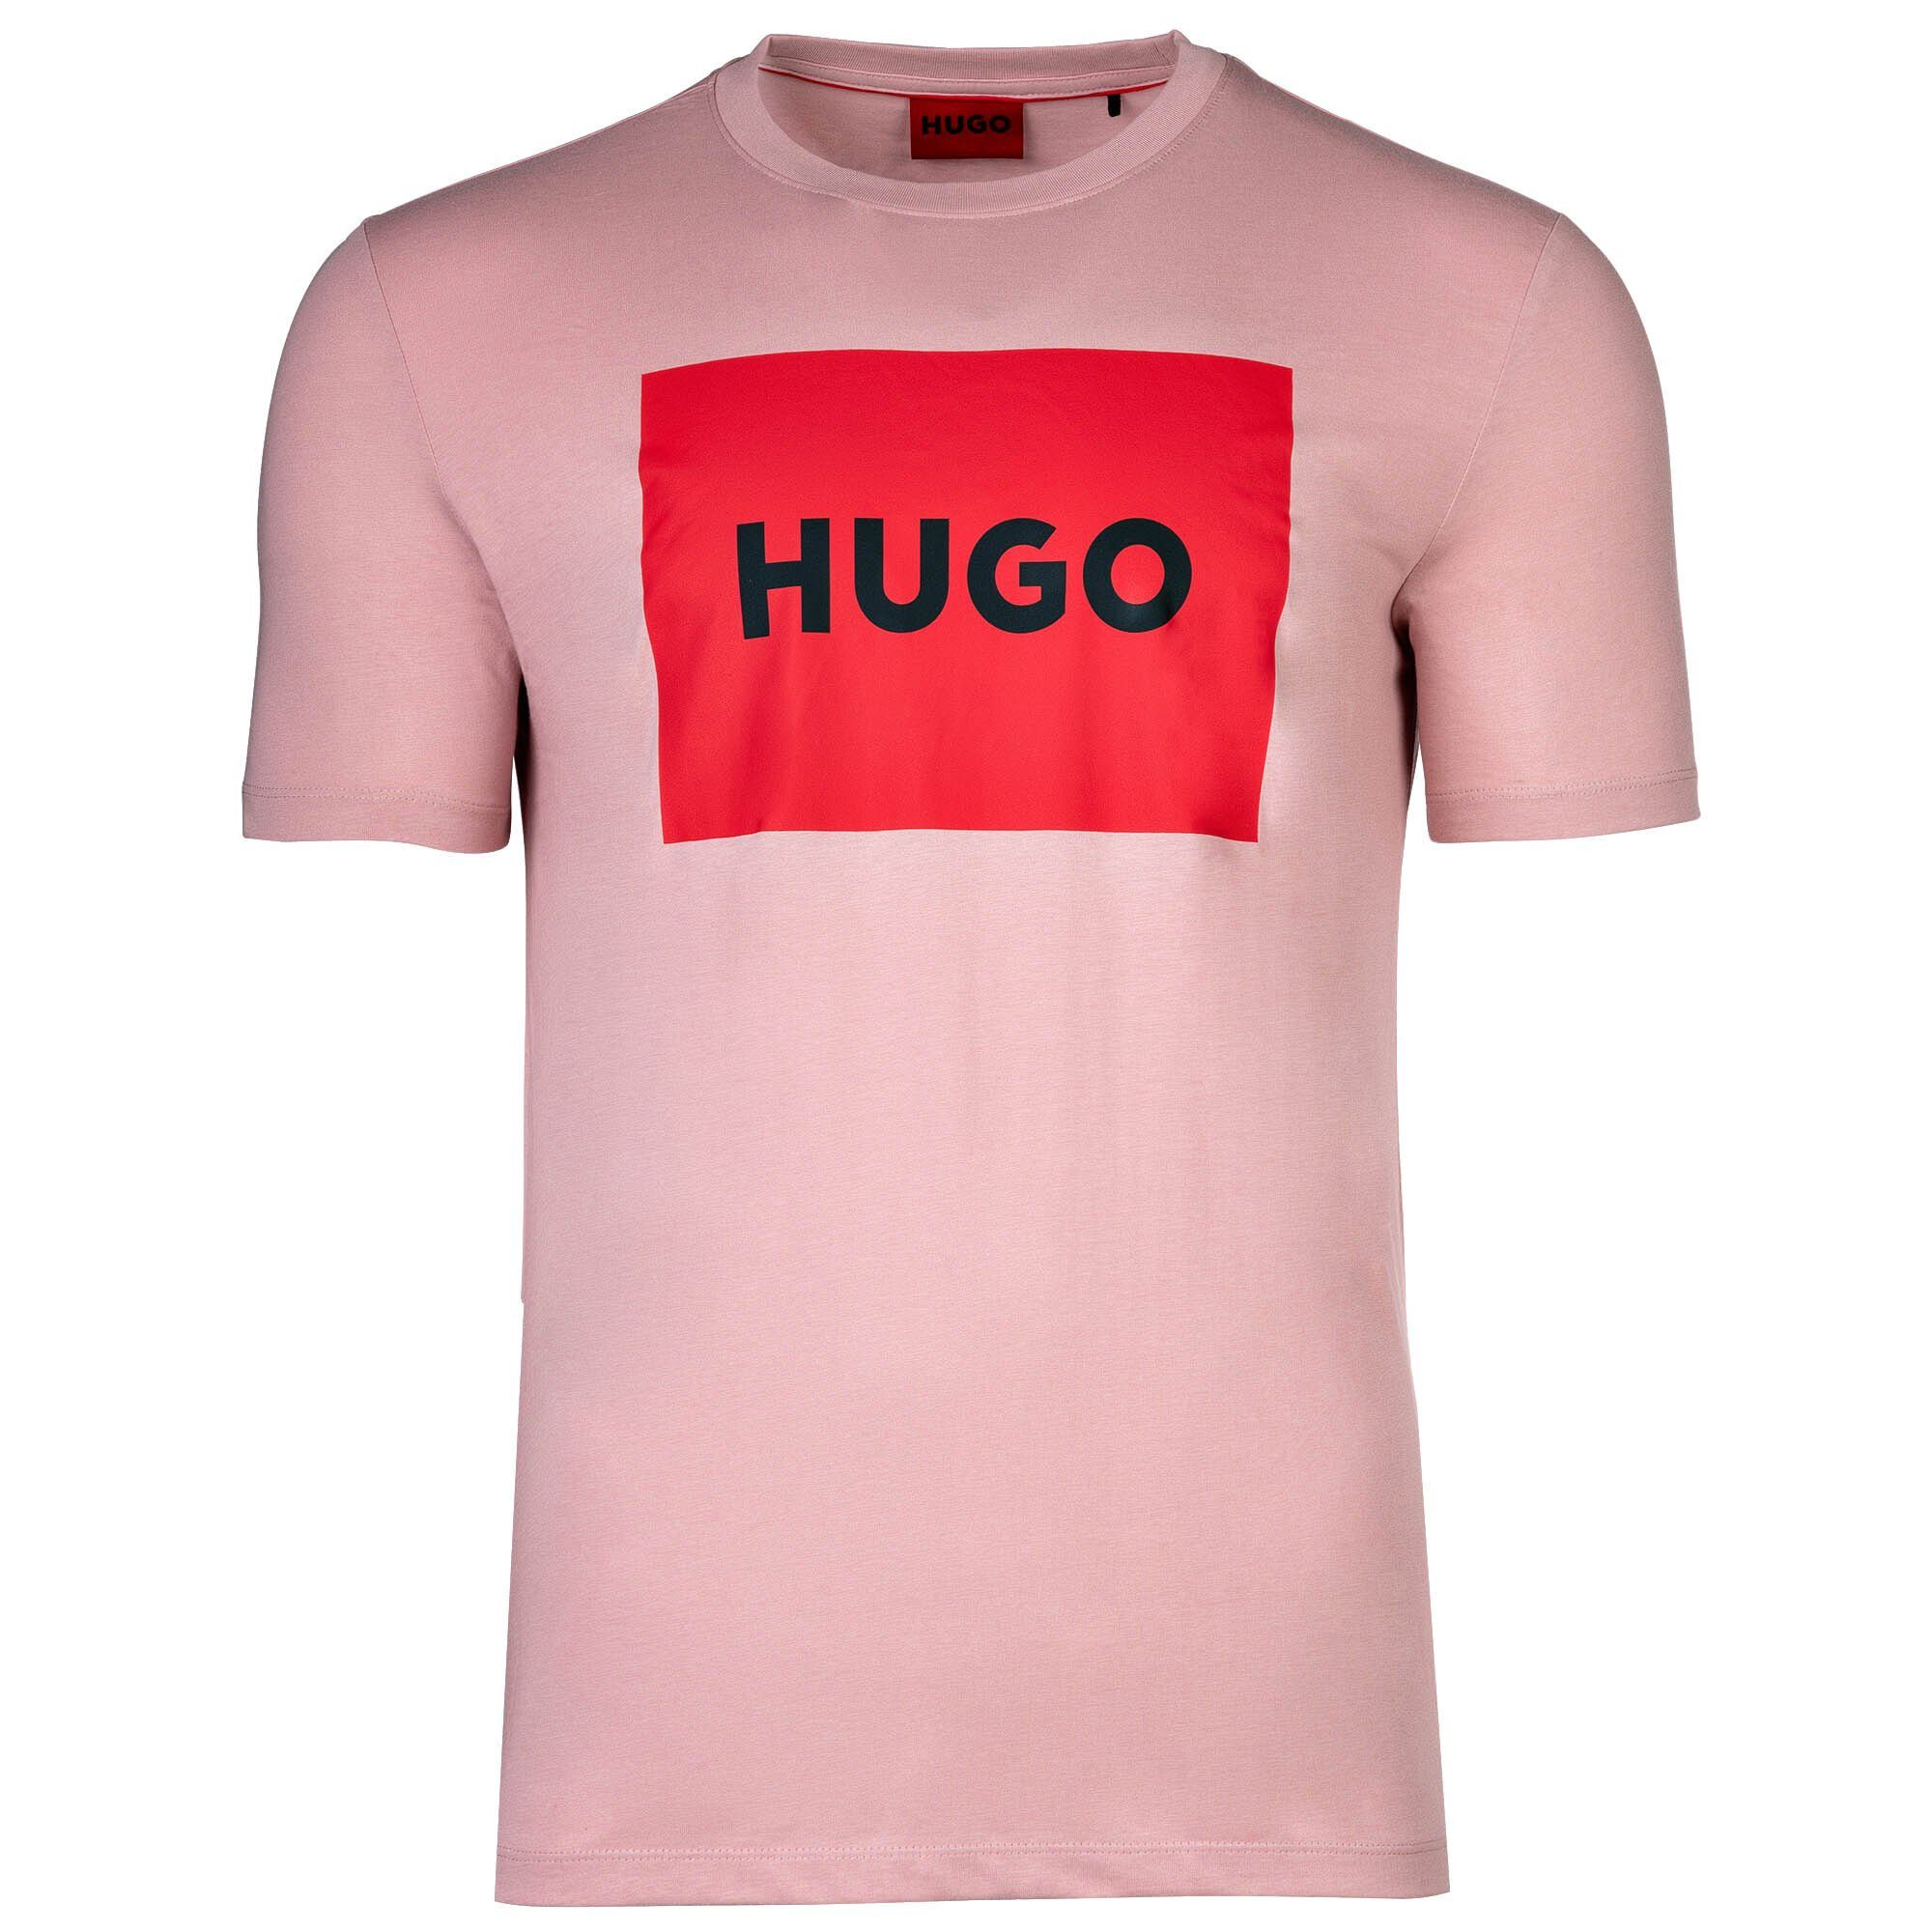 HUGO T-Shirt Herren T-Shirt - (Pastel Dulive222, Kurzarm Rundhals, Rosa Pink)